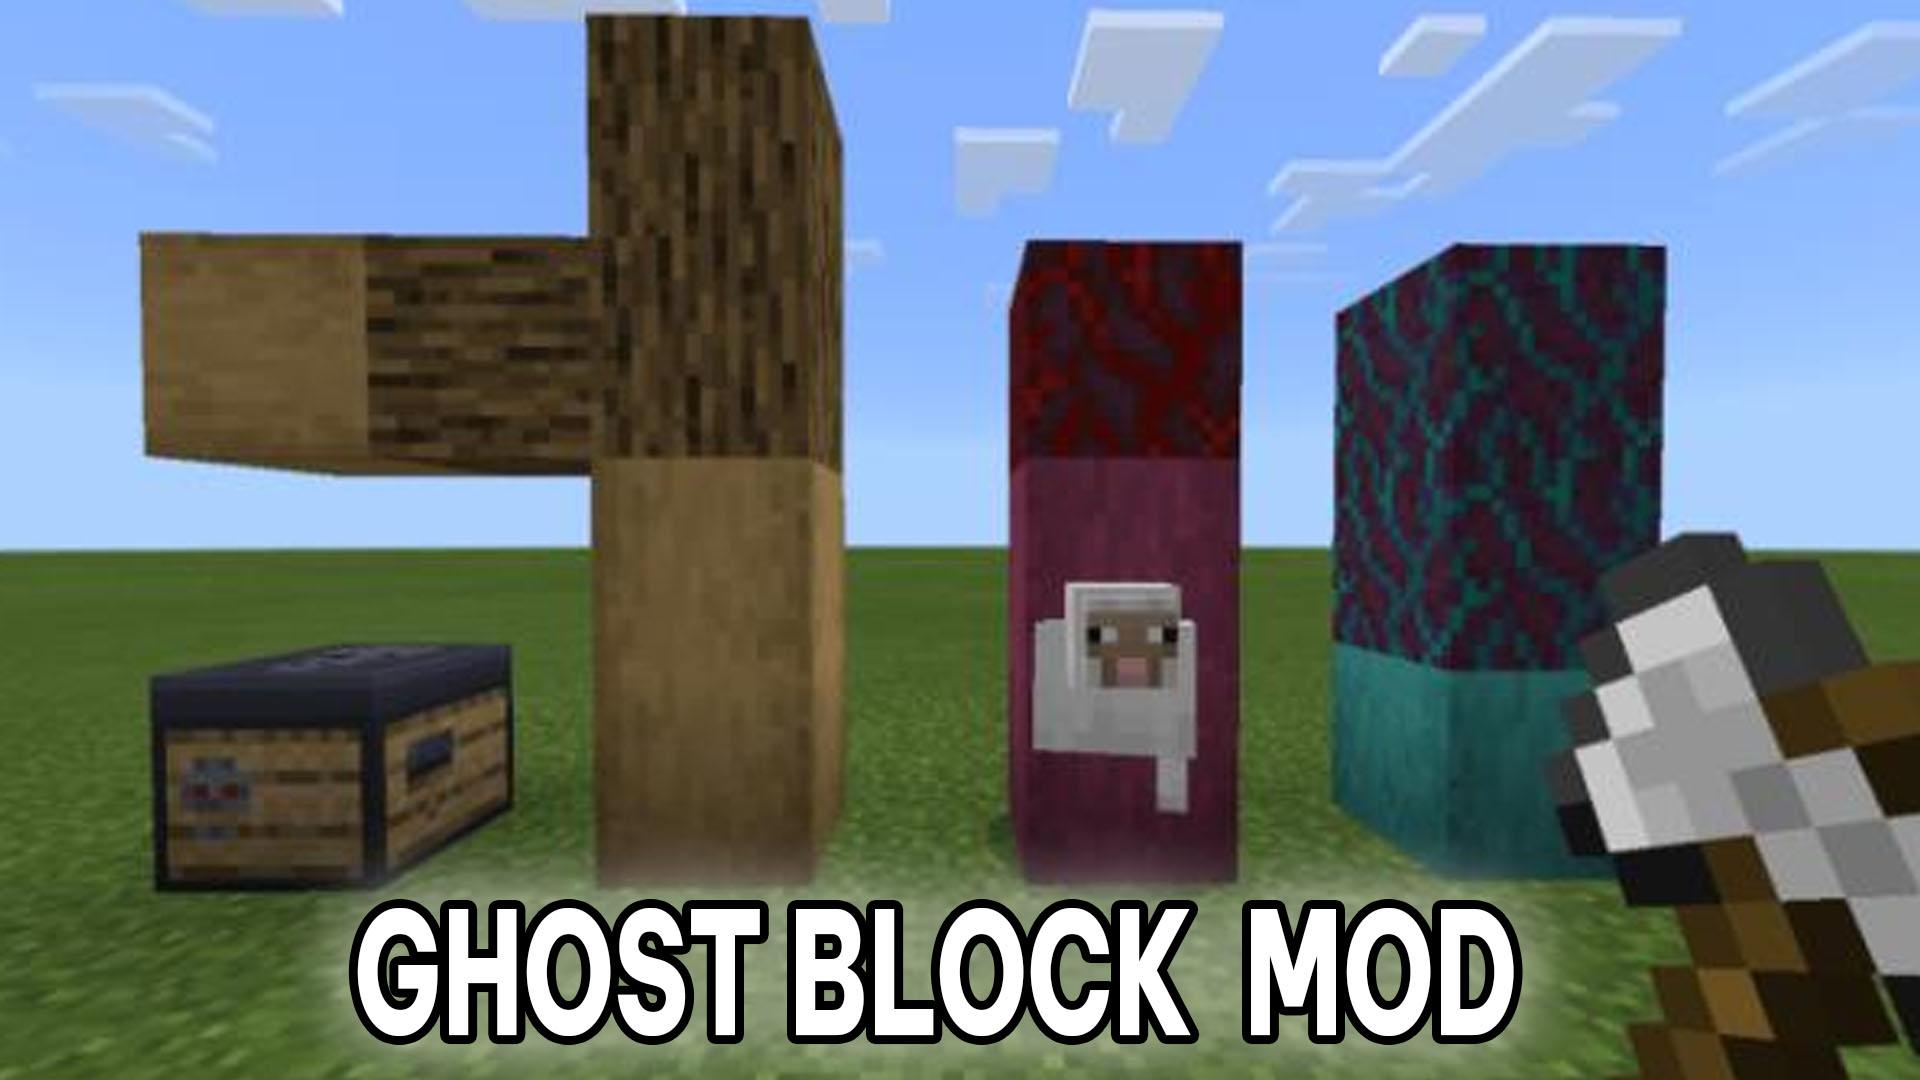 Ghost blocks. Мод на Призрачные блоки. Мод на невидимые блоки. Мод на майнкрафт фантомные блоки. Призрачный блок в майнкрафт.